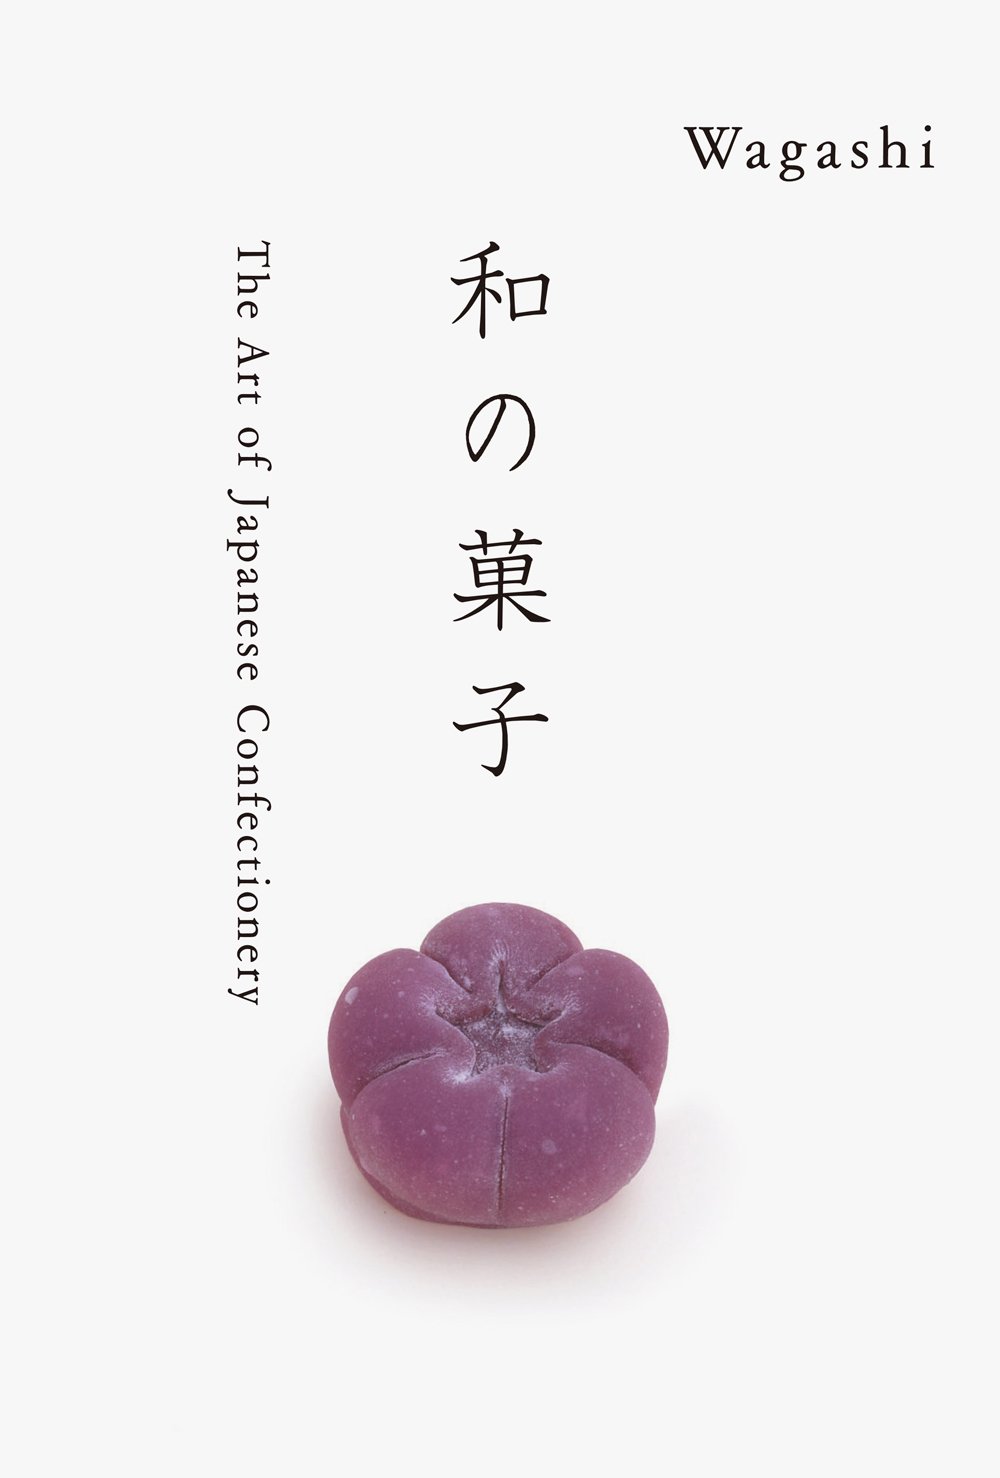 Harper's Bazaar_bánh hoa wagashi trong văn hóa Nhật Bản_07